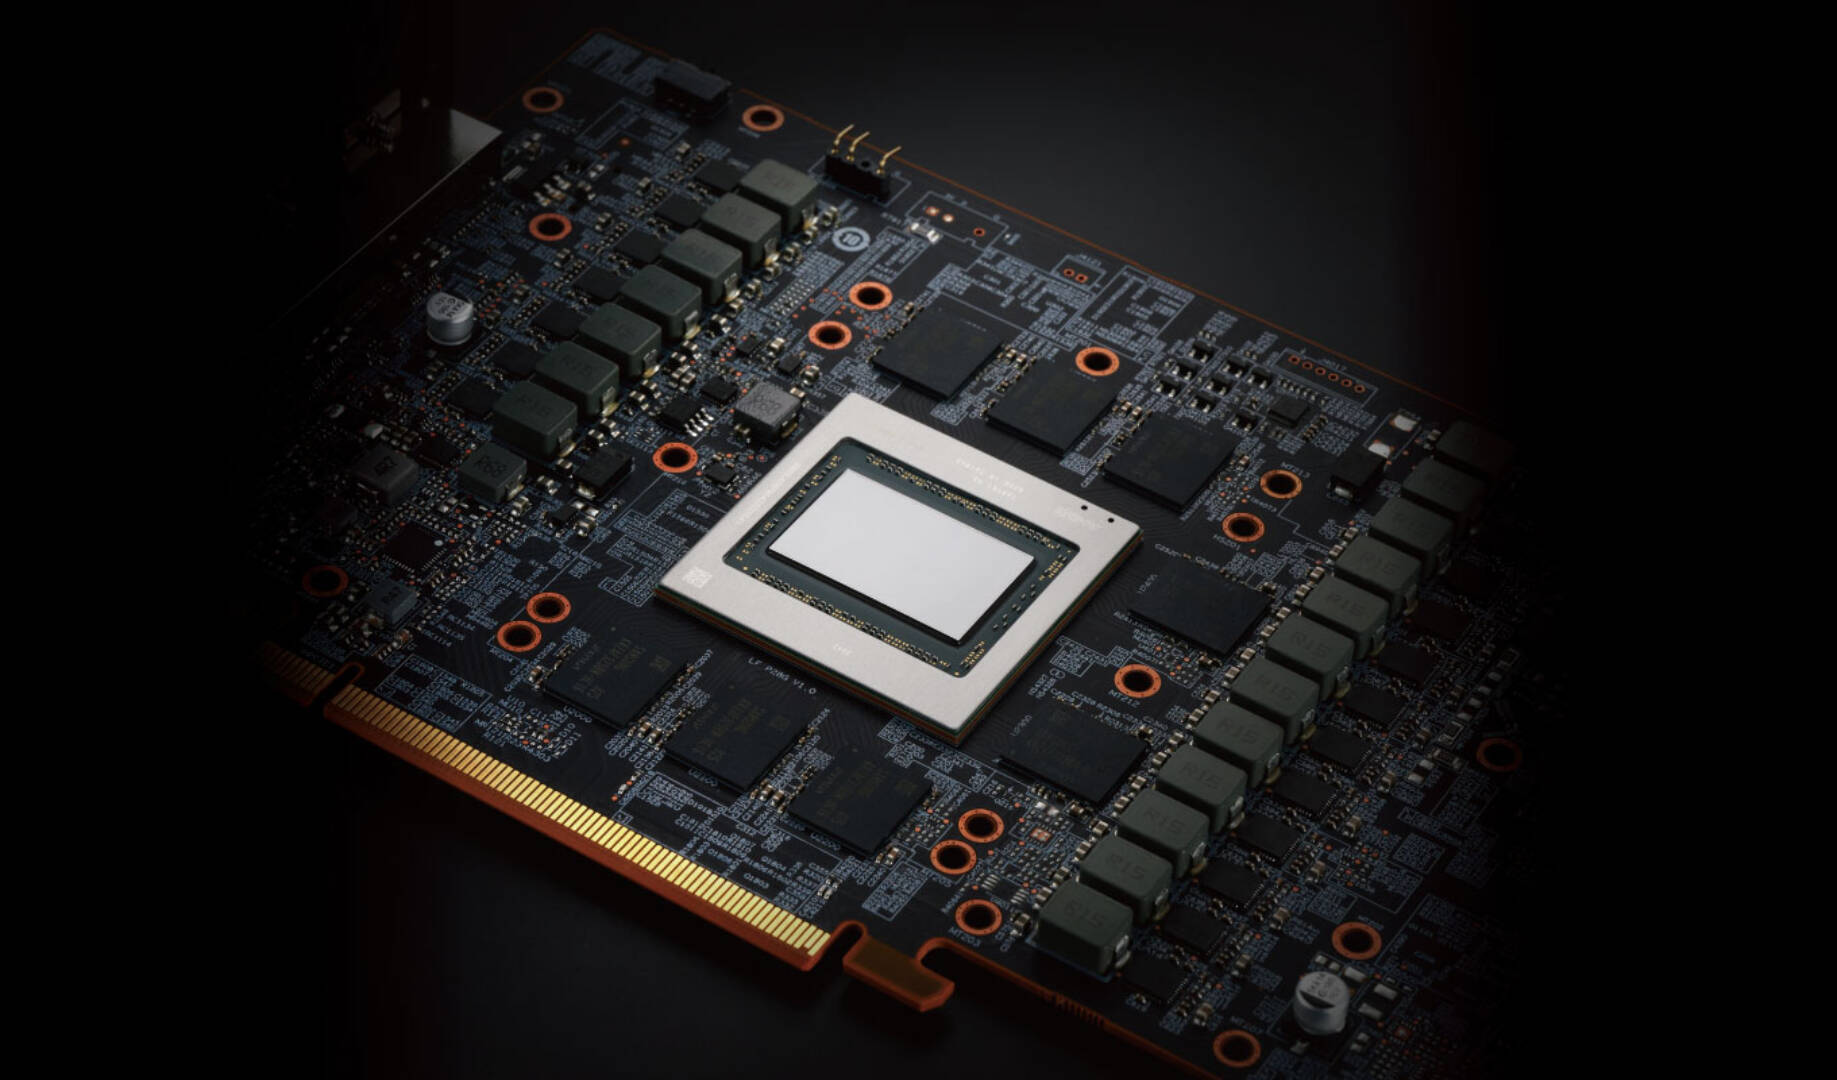 Overclocking AMD Radeon RX 6900 XT